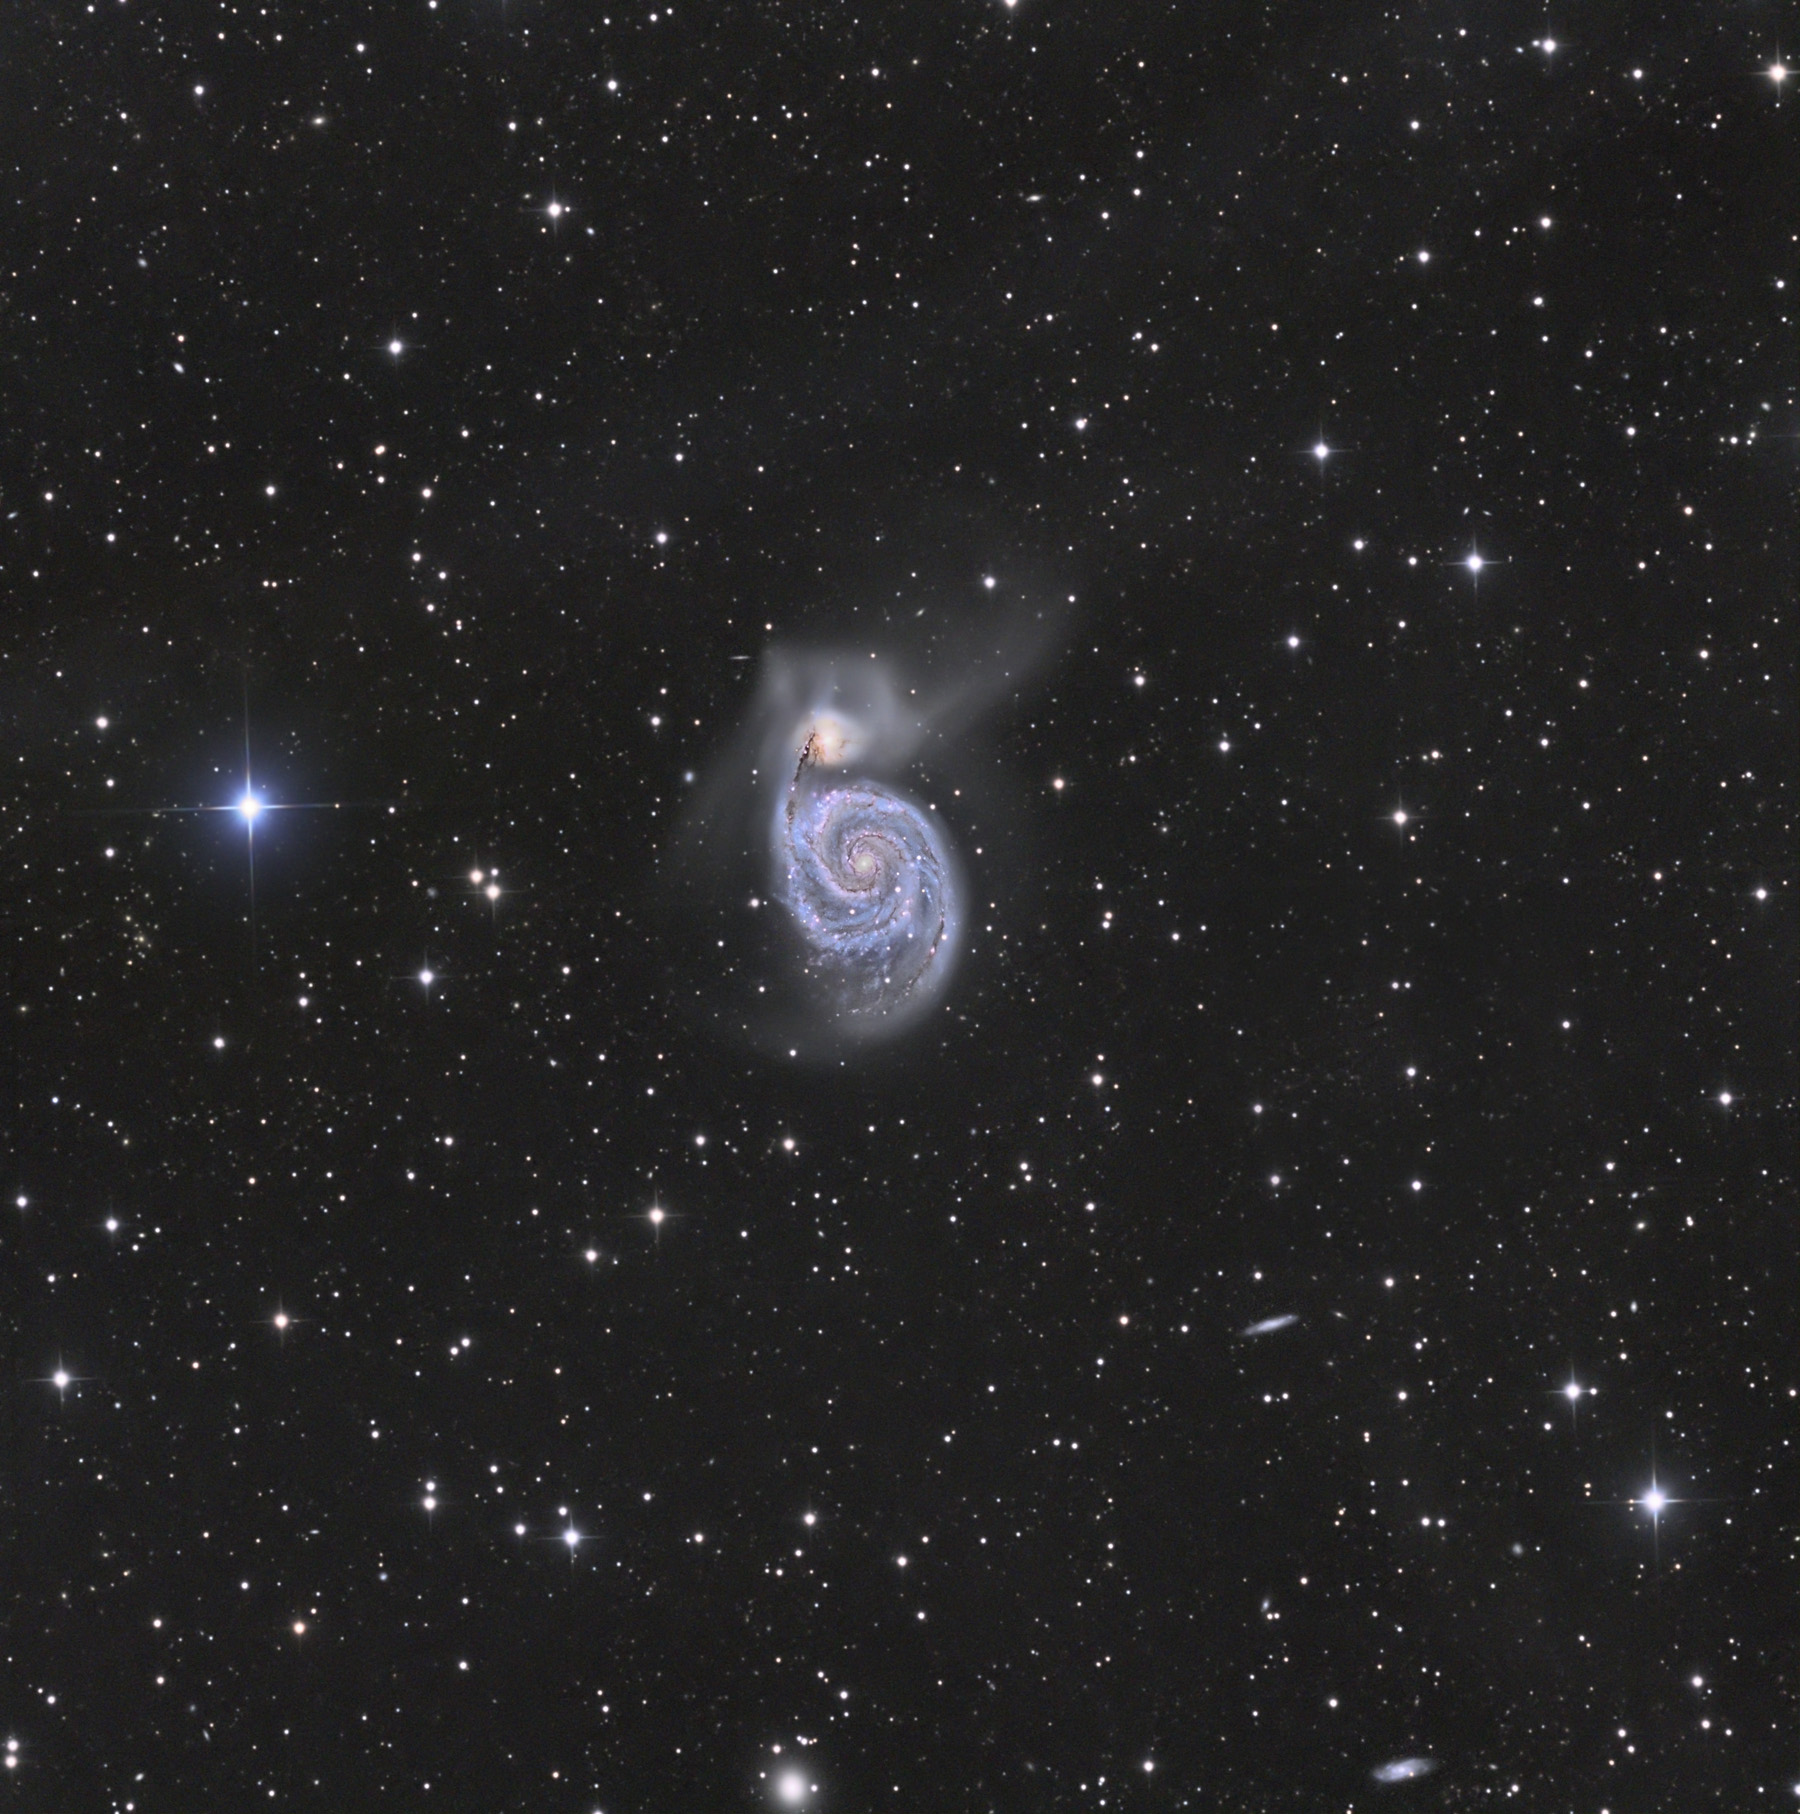 M51 The Whirlpool Galaxy. Photo Credit: Chris Hetlage / Imaging the Cosmos